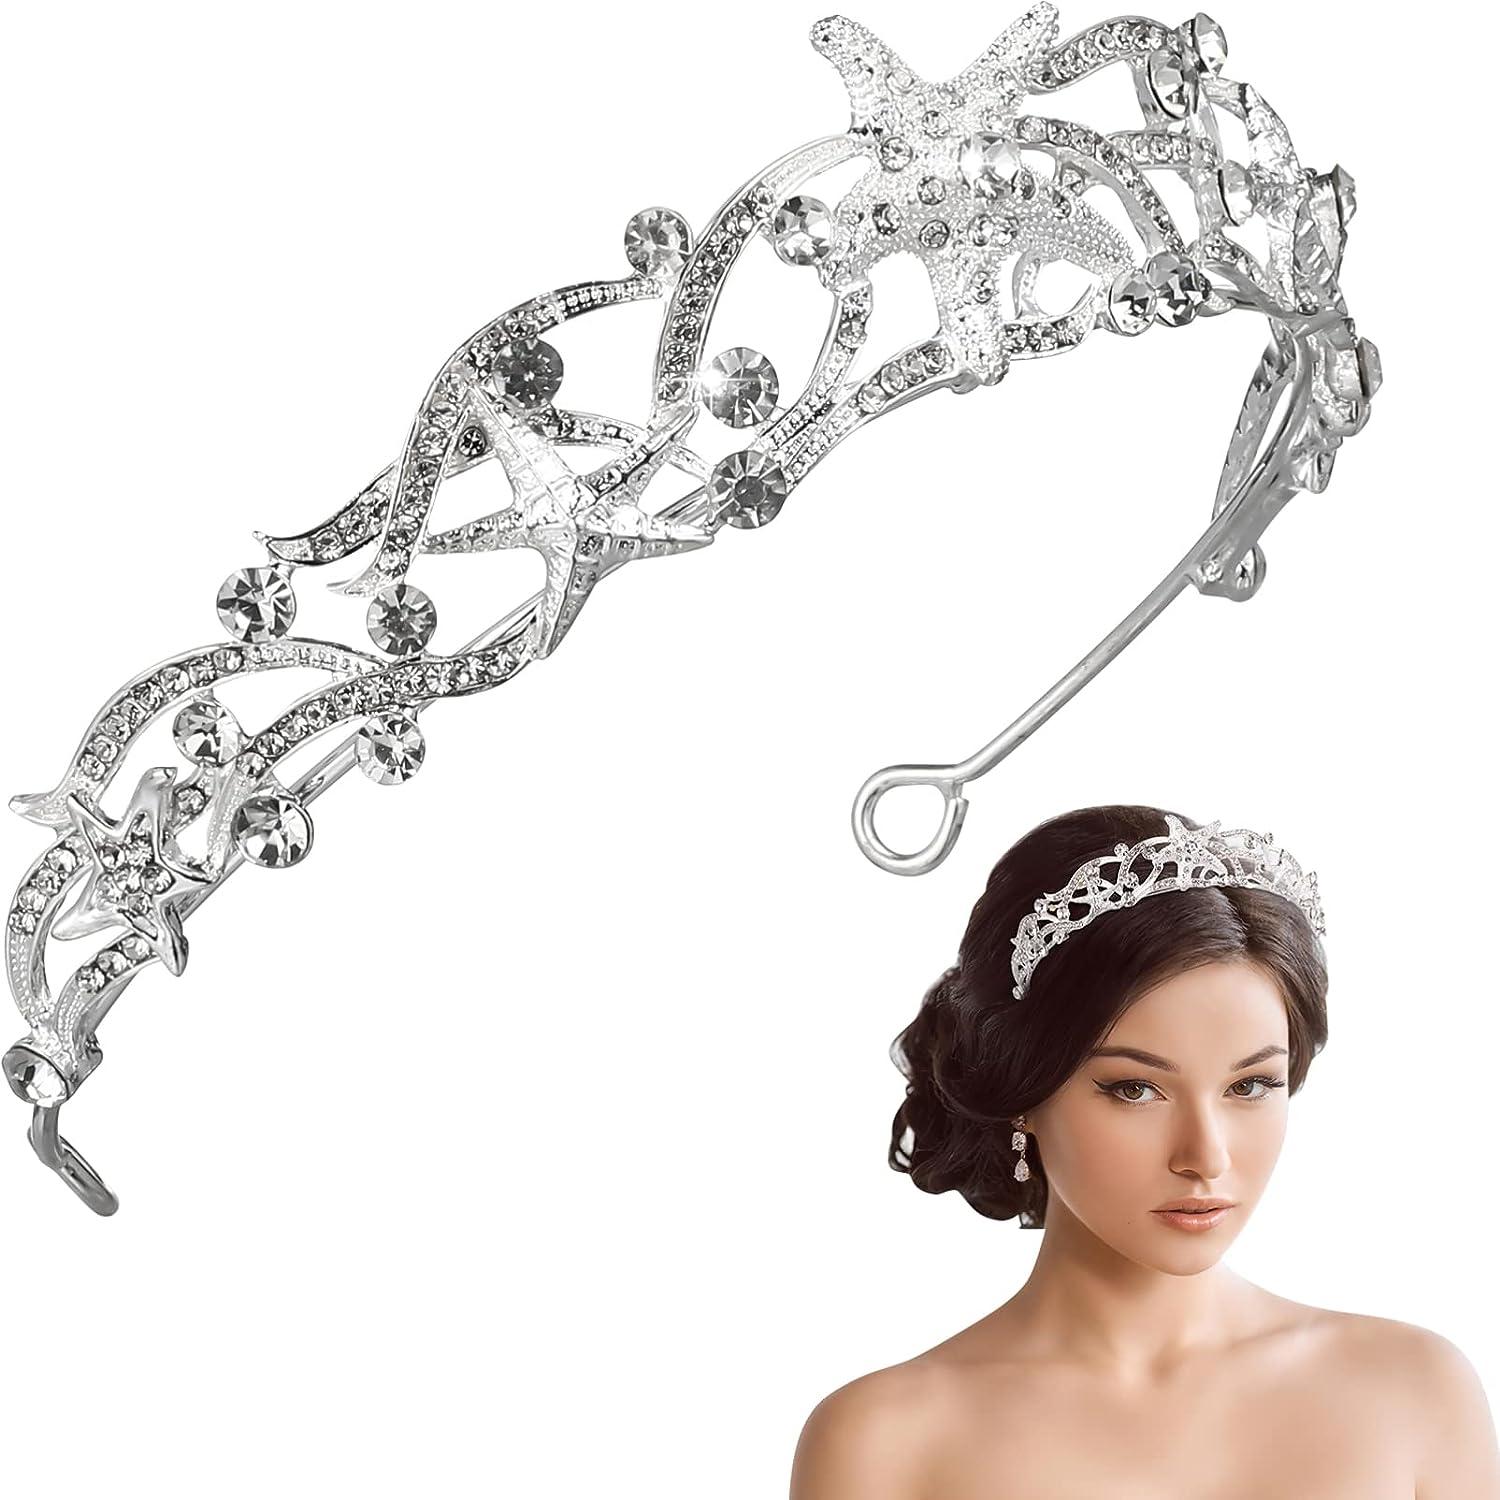  Beaupretty hexagram headband womens headbands delicate bridal  hairband tiara wedding headpiece crowns for women dresses for girls  exquisite headband decor woman Diamond Metal : Beauty & Personal Care